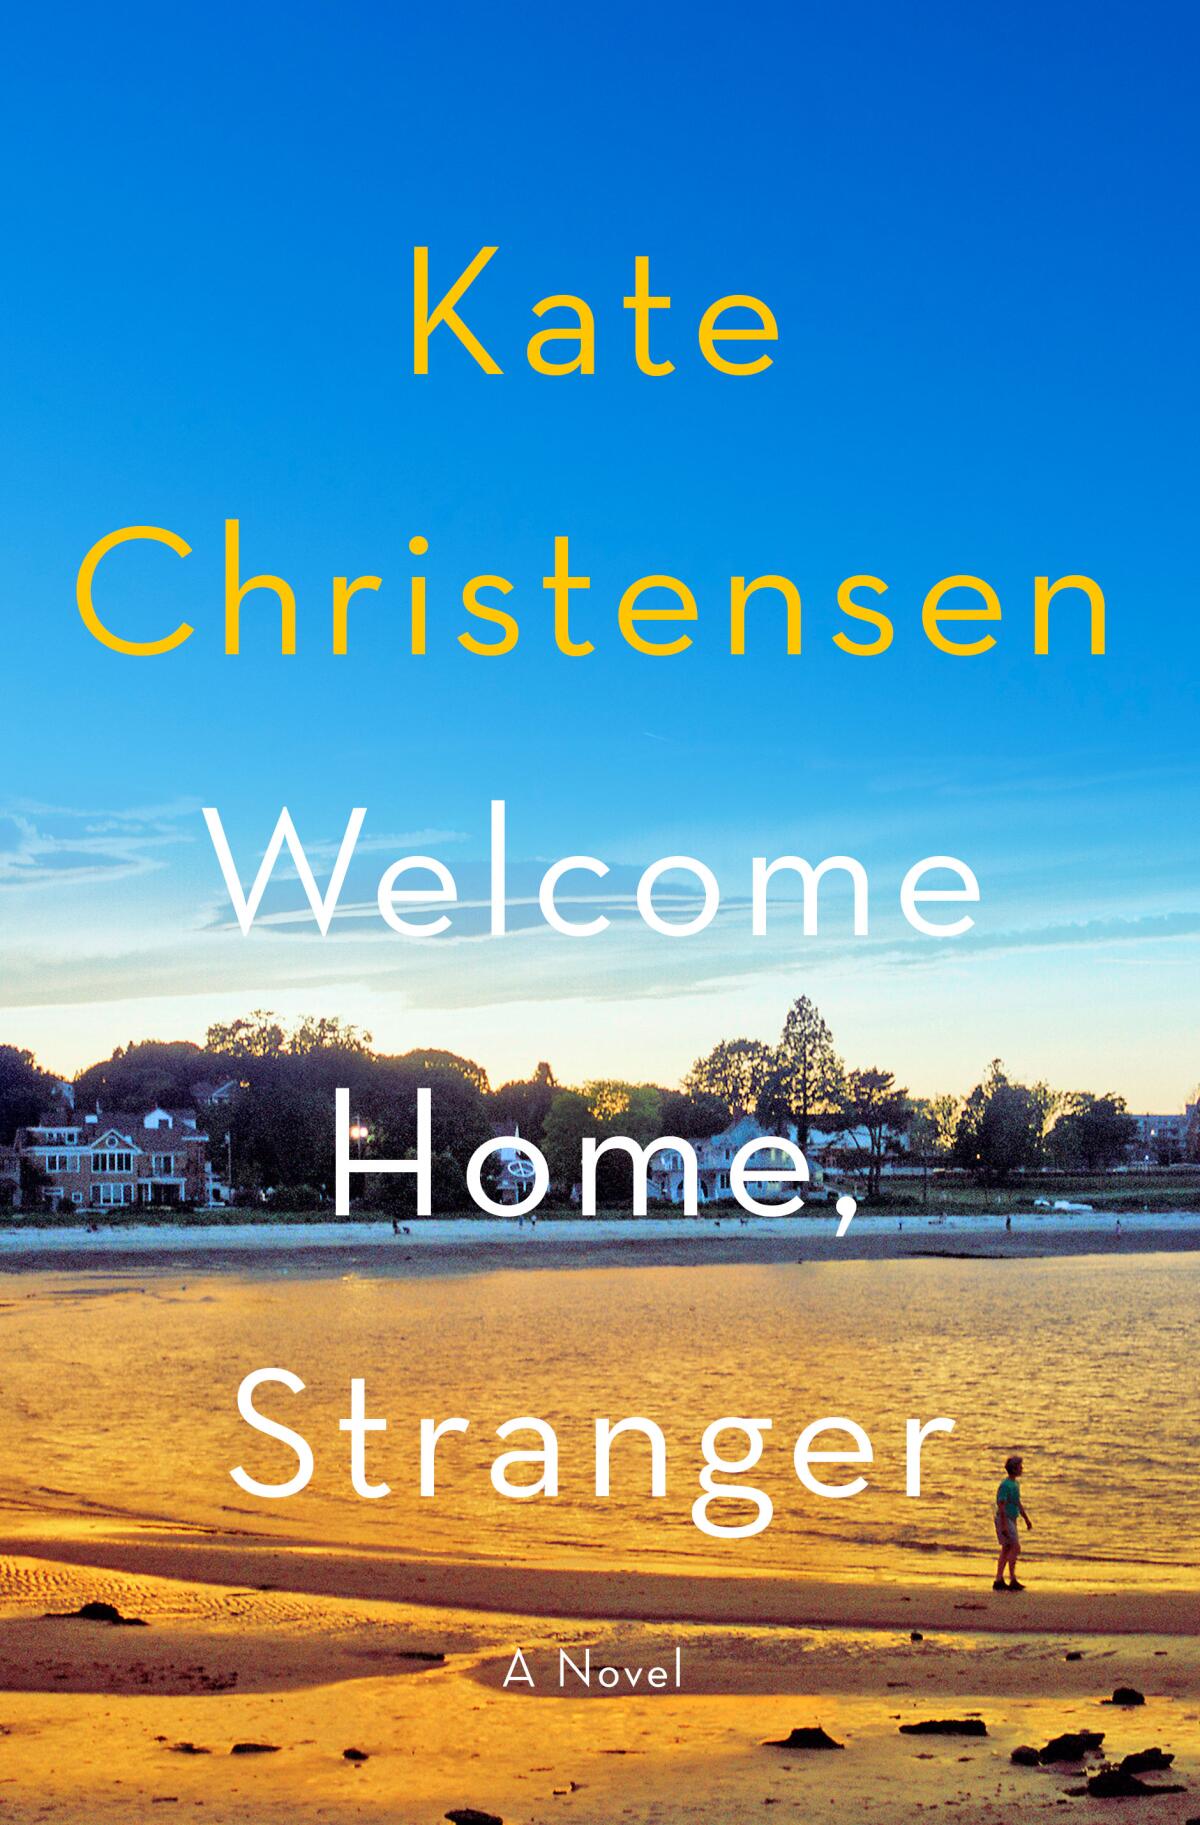 "Welcome Home, Stranger," by Kate Christensen